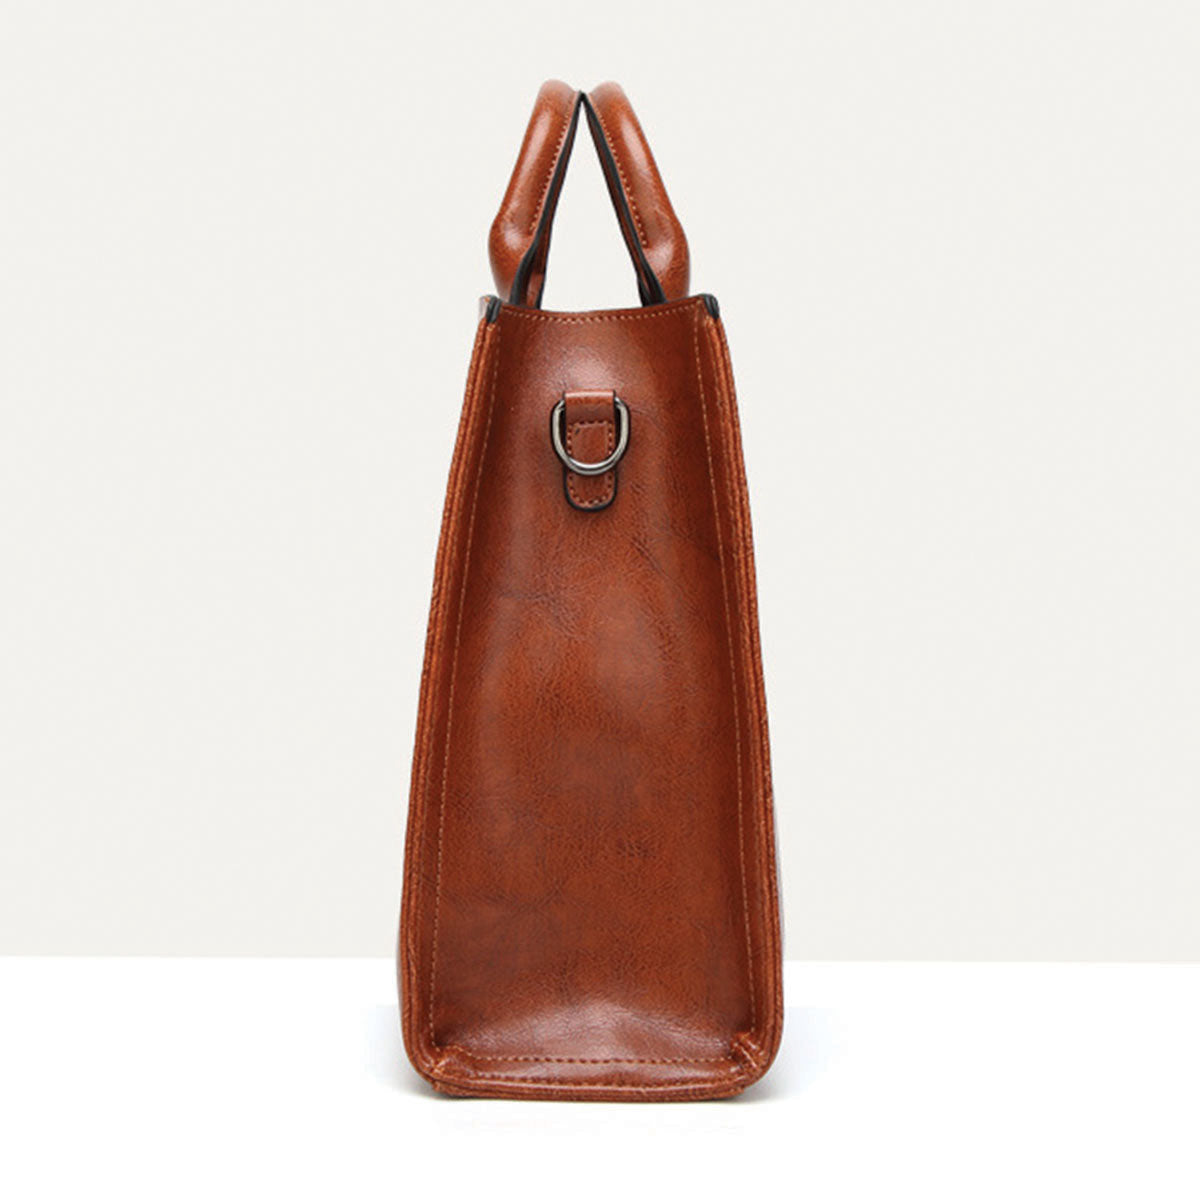 Your Best Companion - Weimaraner Luxury Handbag V1